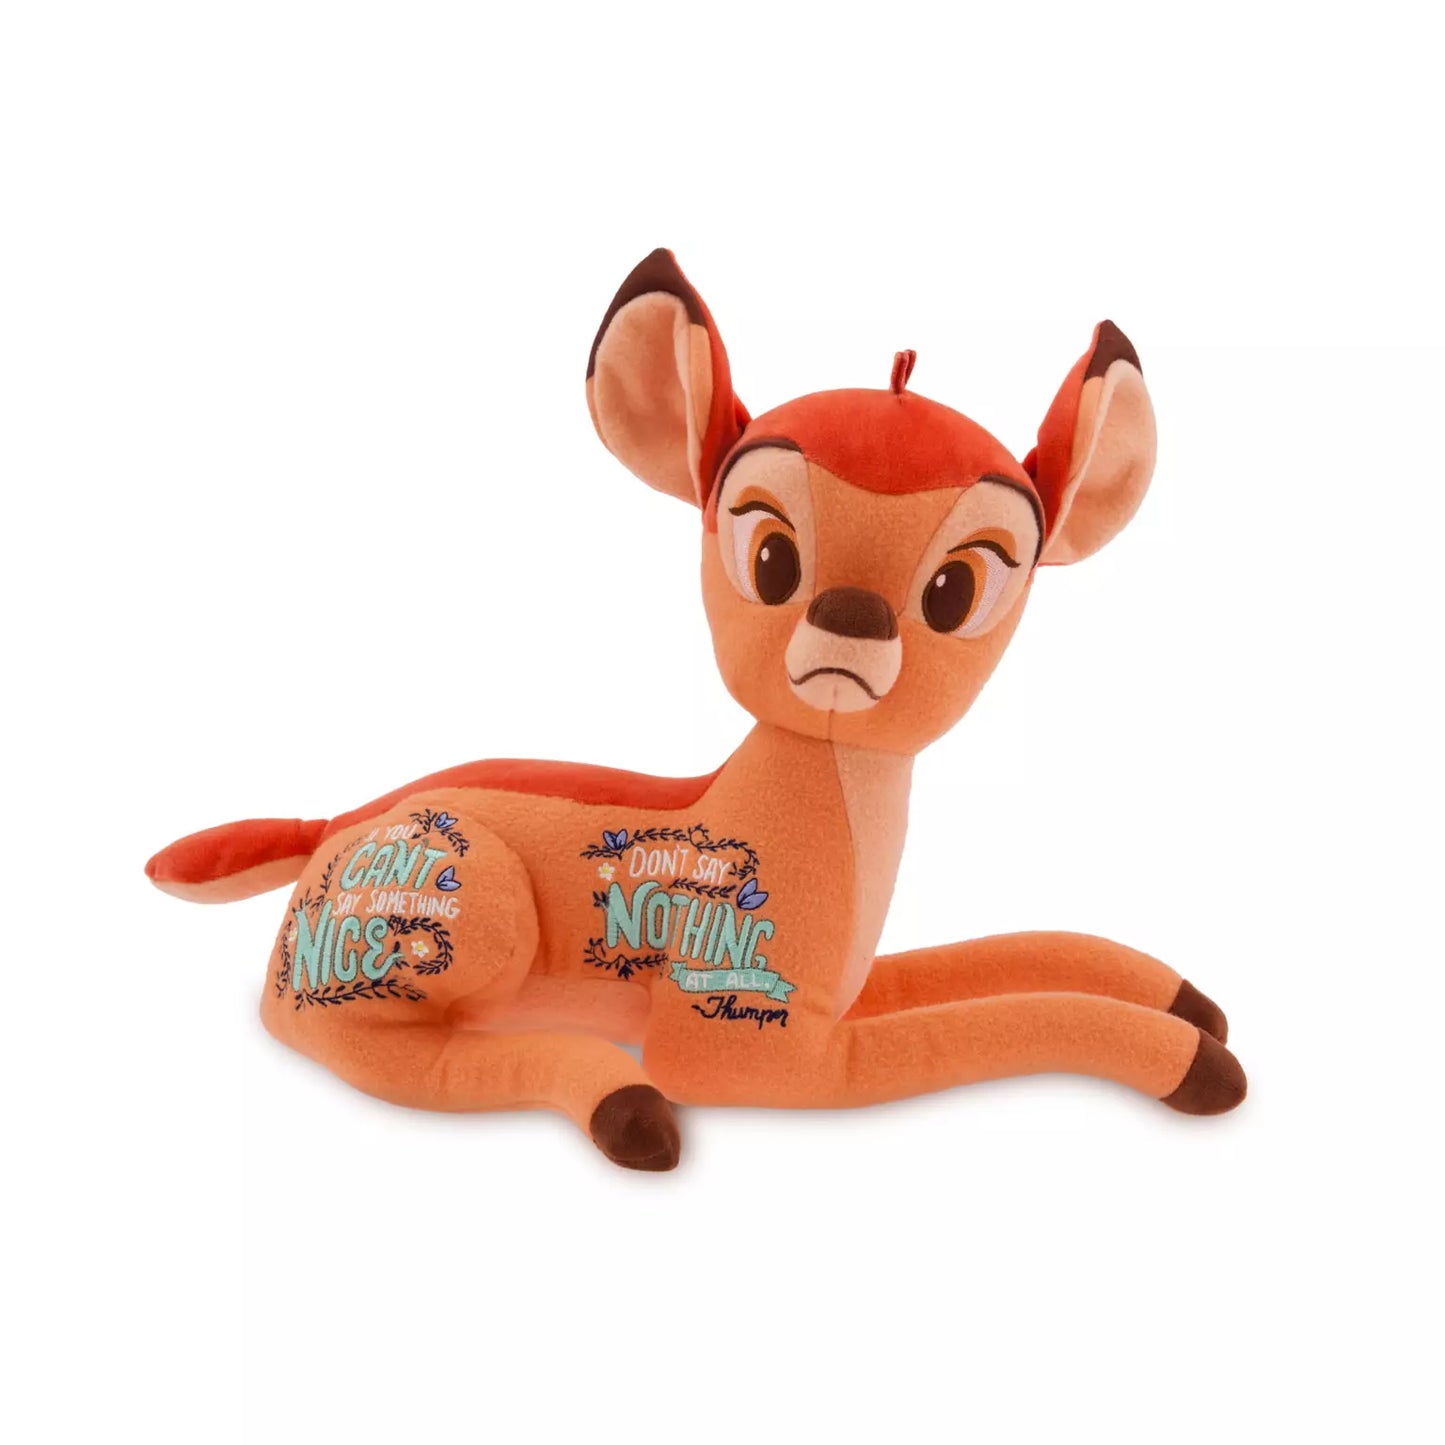 Disney Wisdom Limited Edition Plush 08/12 - Bambi